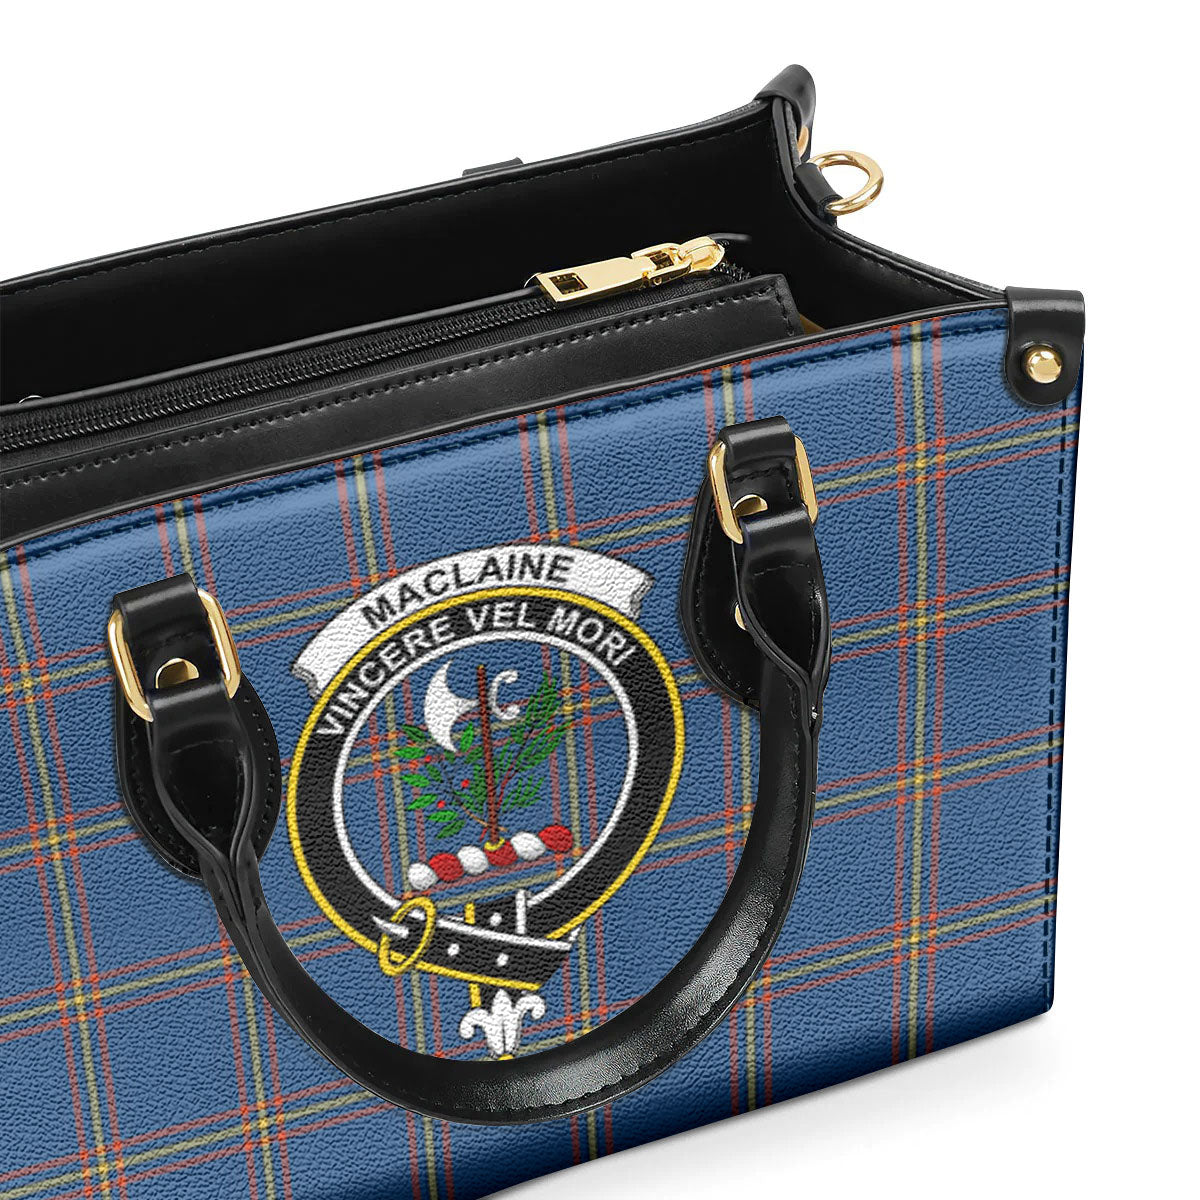 MacLaine of Loch Buie Hunting Ancient Tartan Crest Leather Handbag